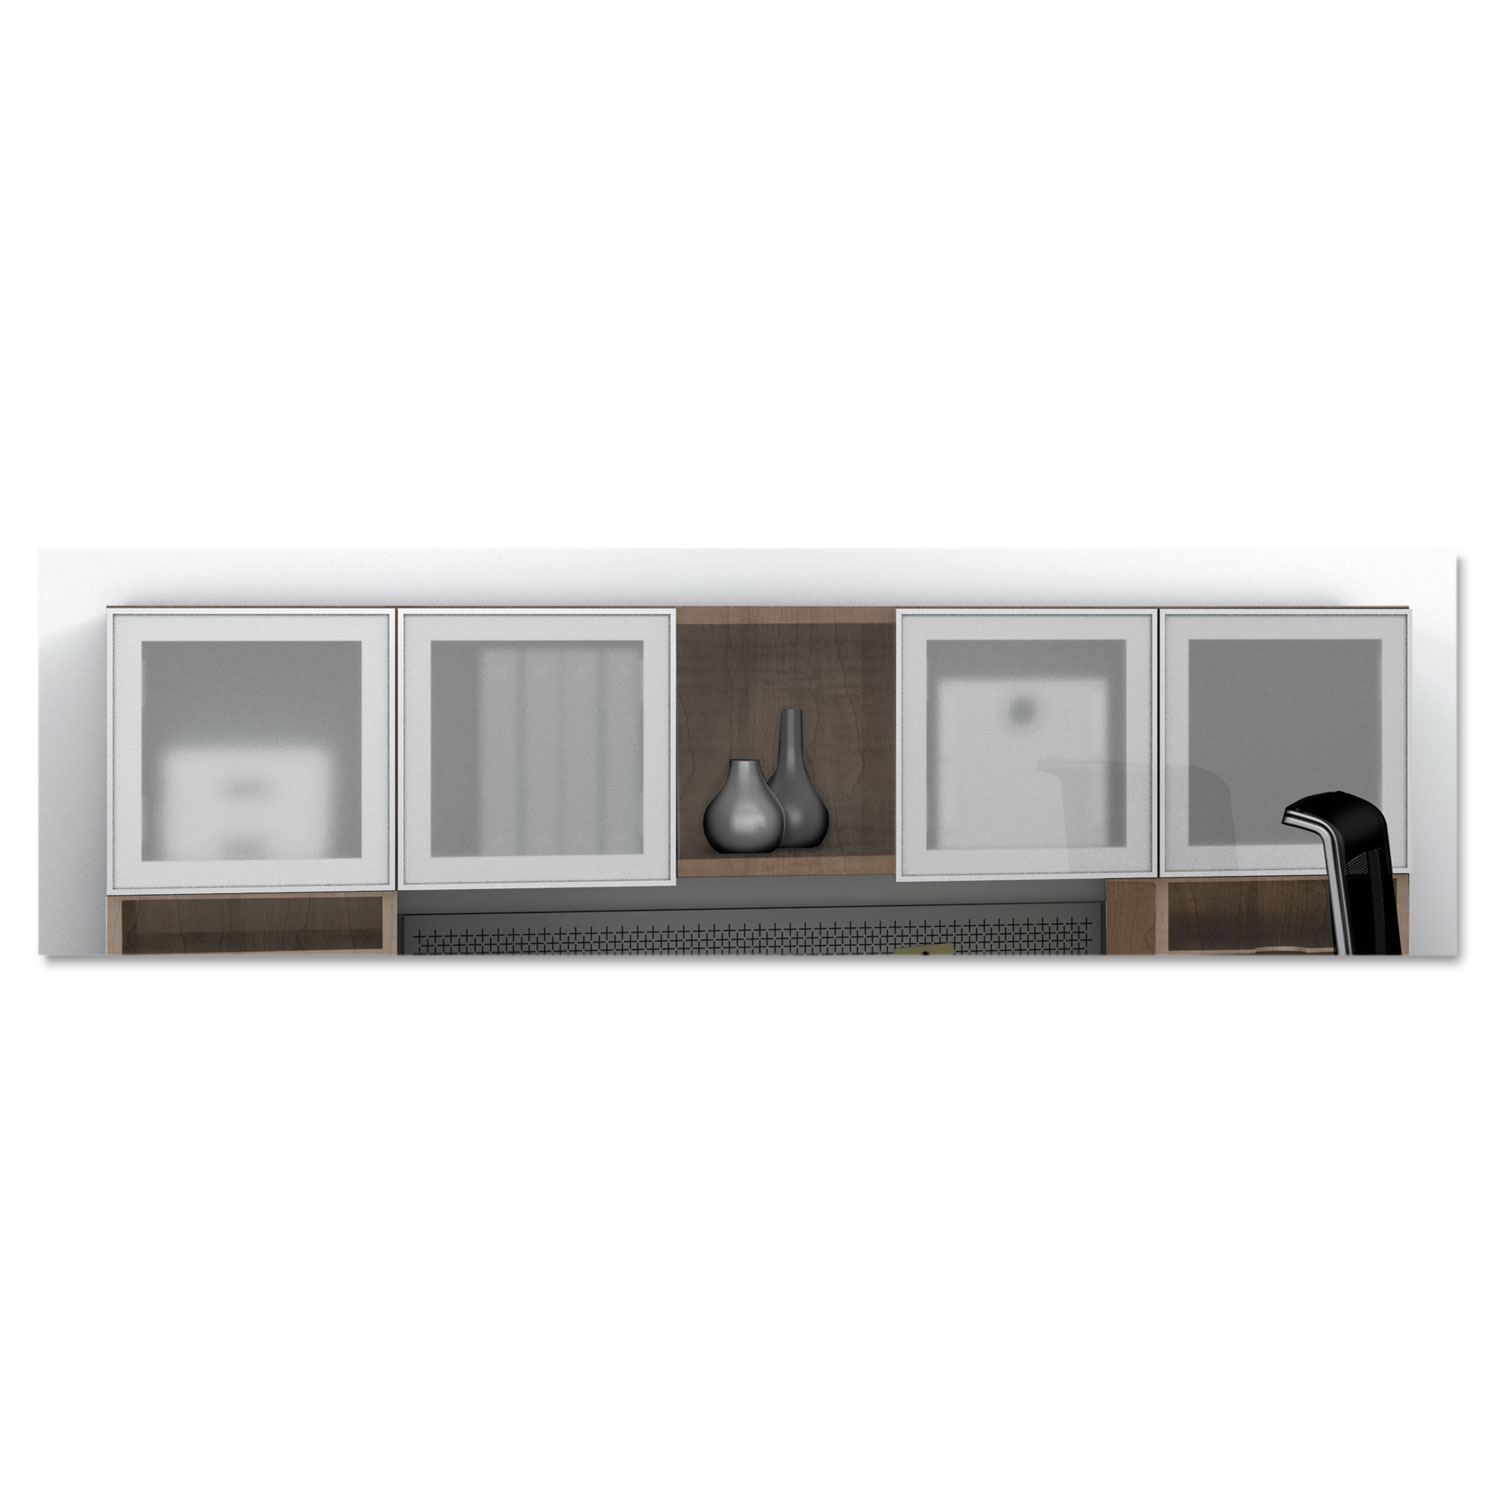  Safco EZH72FAGY e5 Series Overhead Storage Cabinet, 72w x 15d x 15h, Summer Suede (MLNEZH72FAGY) 